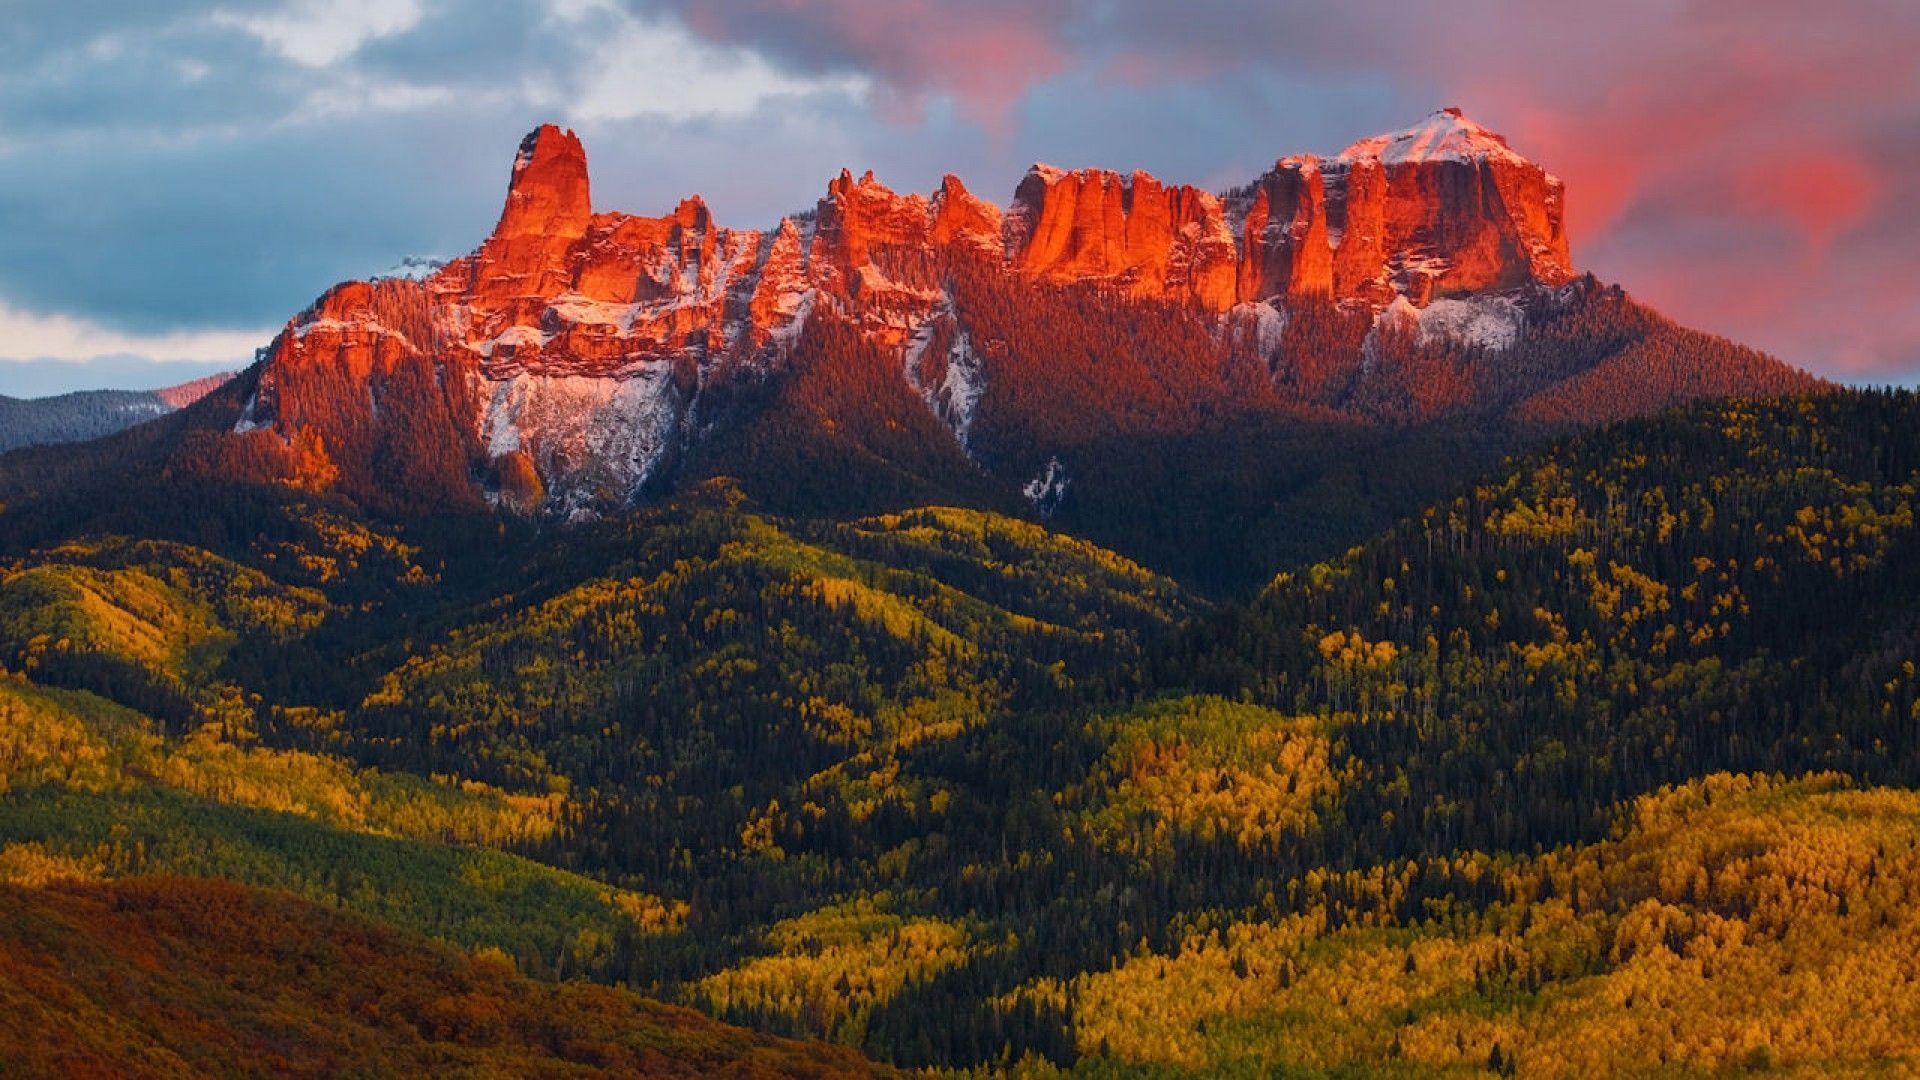 Colorado Image Download Free. HD Wallpaper, Background, Image